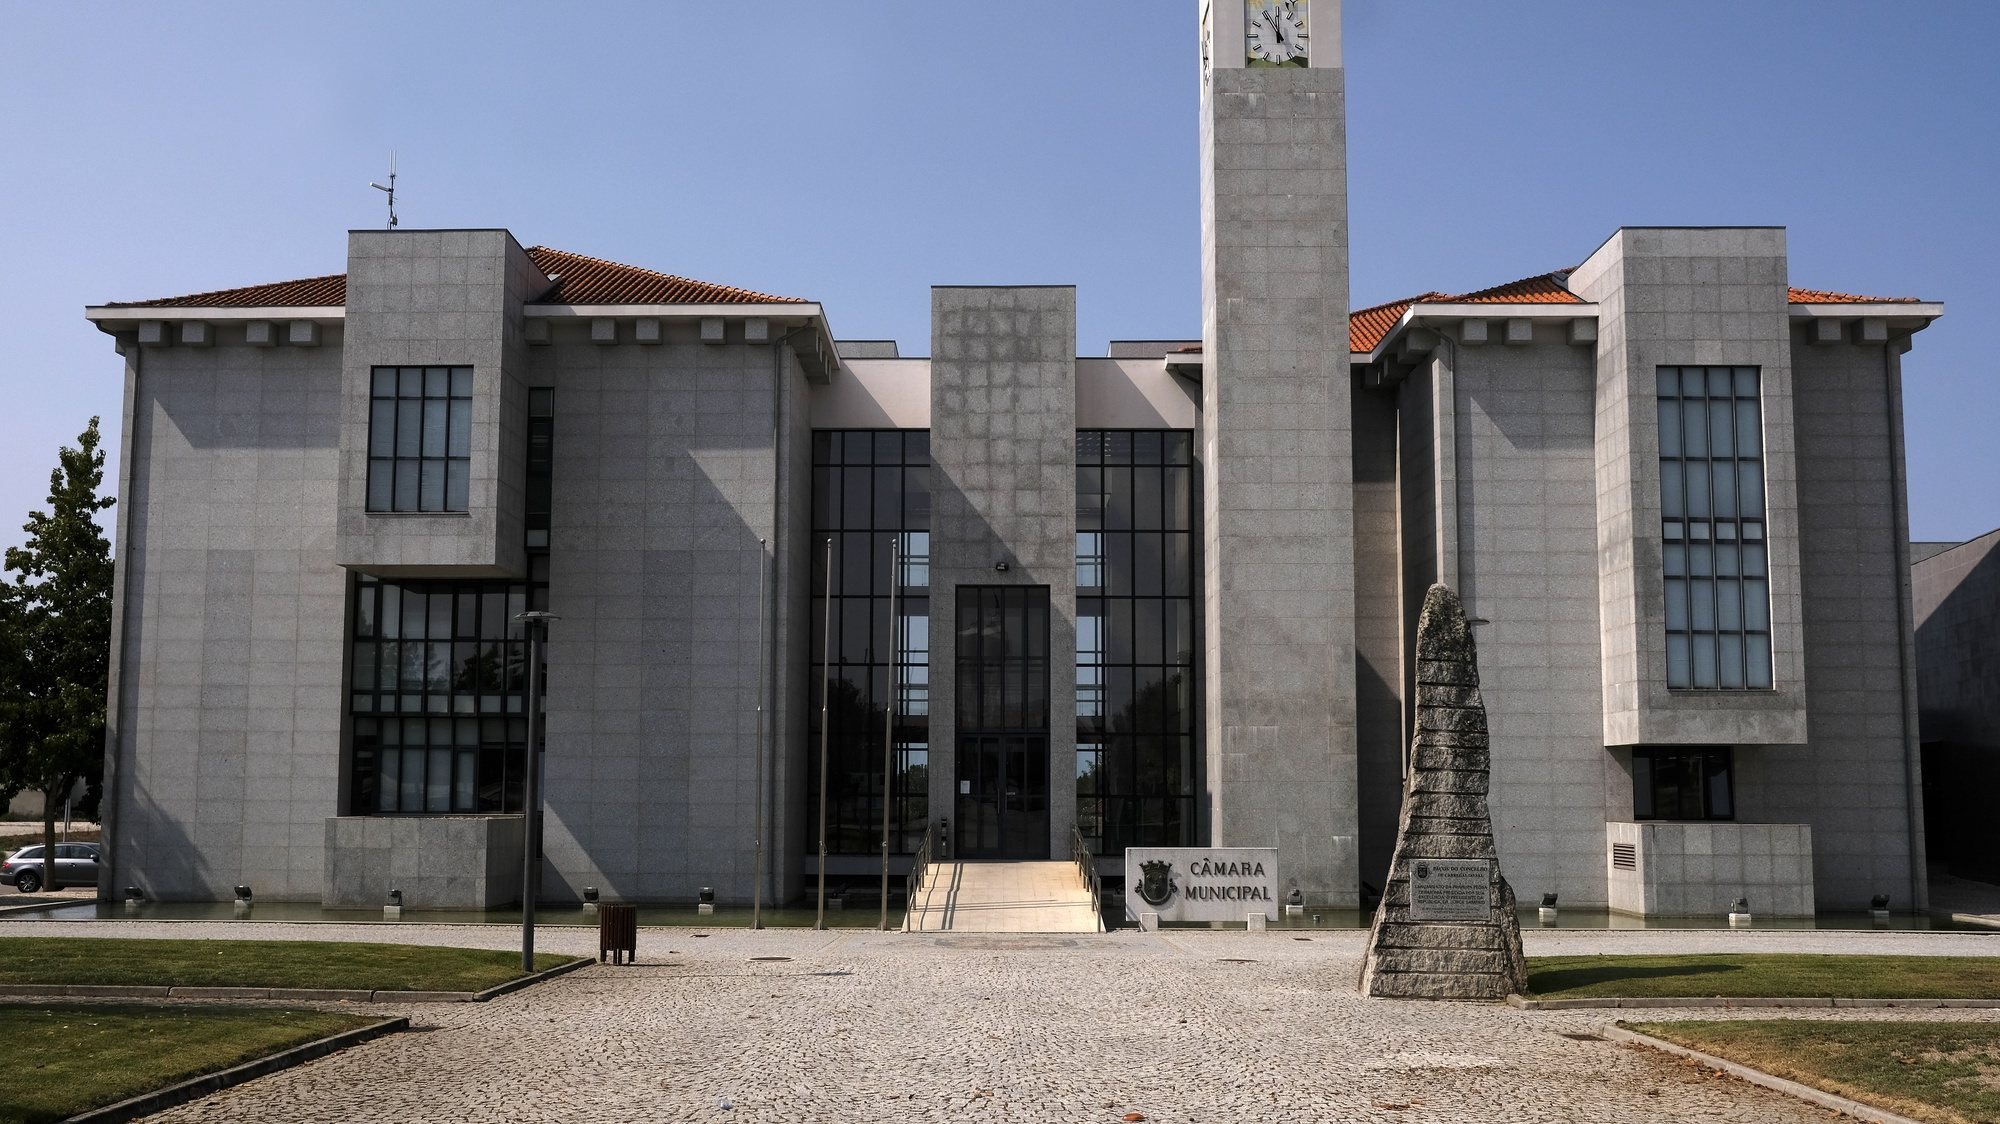 Edifício da Câmara Municipal de Carregal, Distrito de Viseu, 14 de setembro de 2017. NUNO ANDRÉ FERREIRA / LUSA.